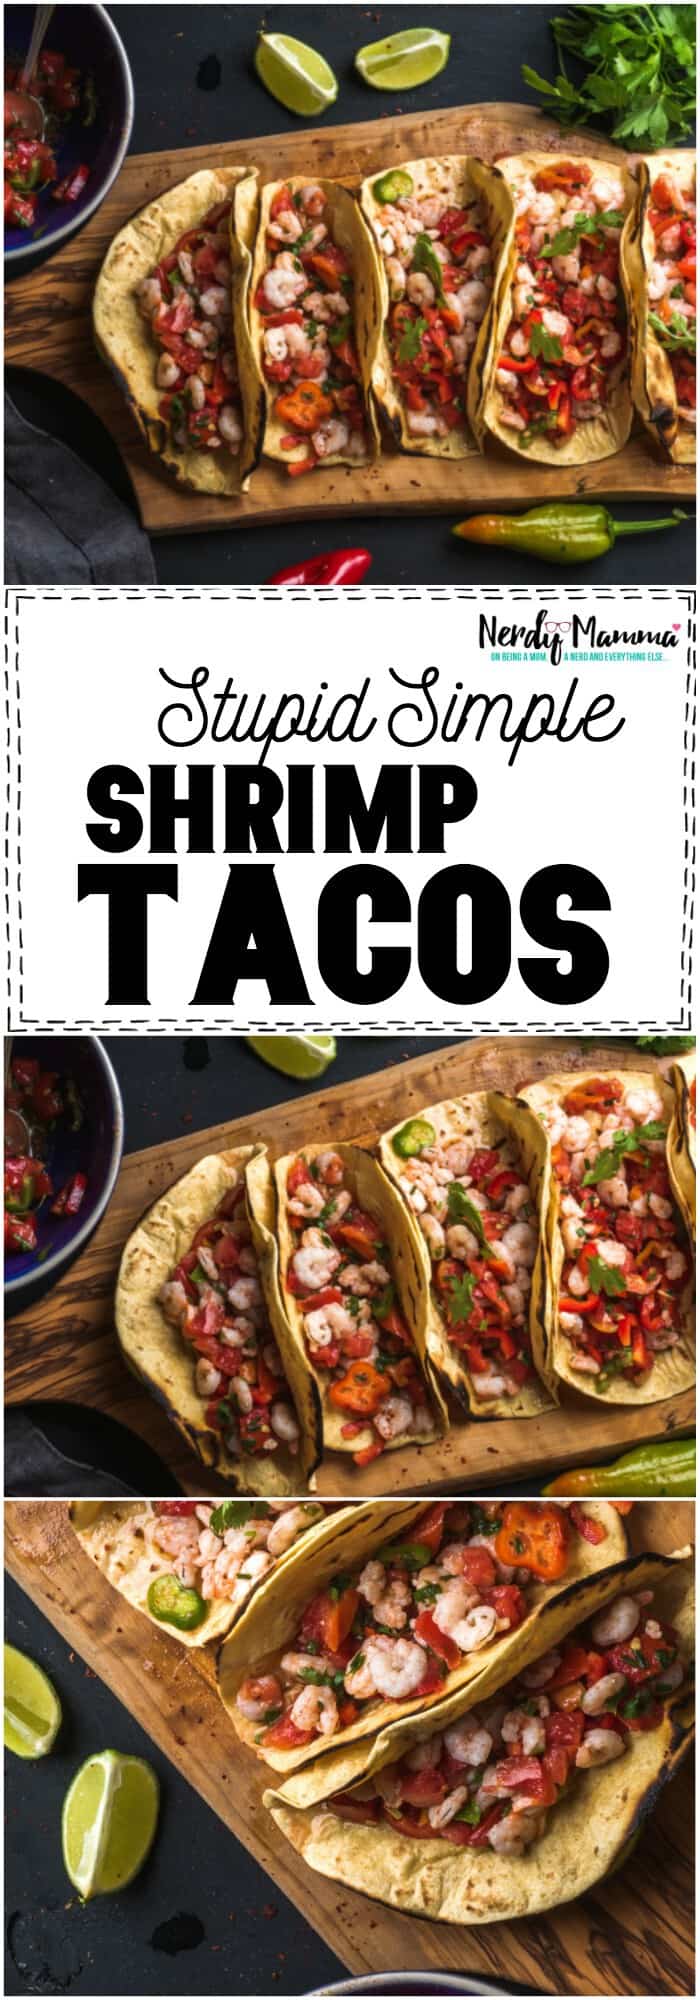 OMG! This Stupid Simple Shrimp Taco recipe is so ridiculously easy. SO FAST! #shirimp #easy #recipe #shrimptaco #mexicanfood #simpleshrimptaco